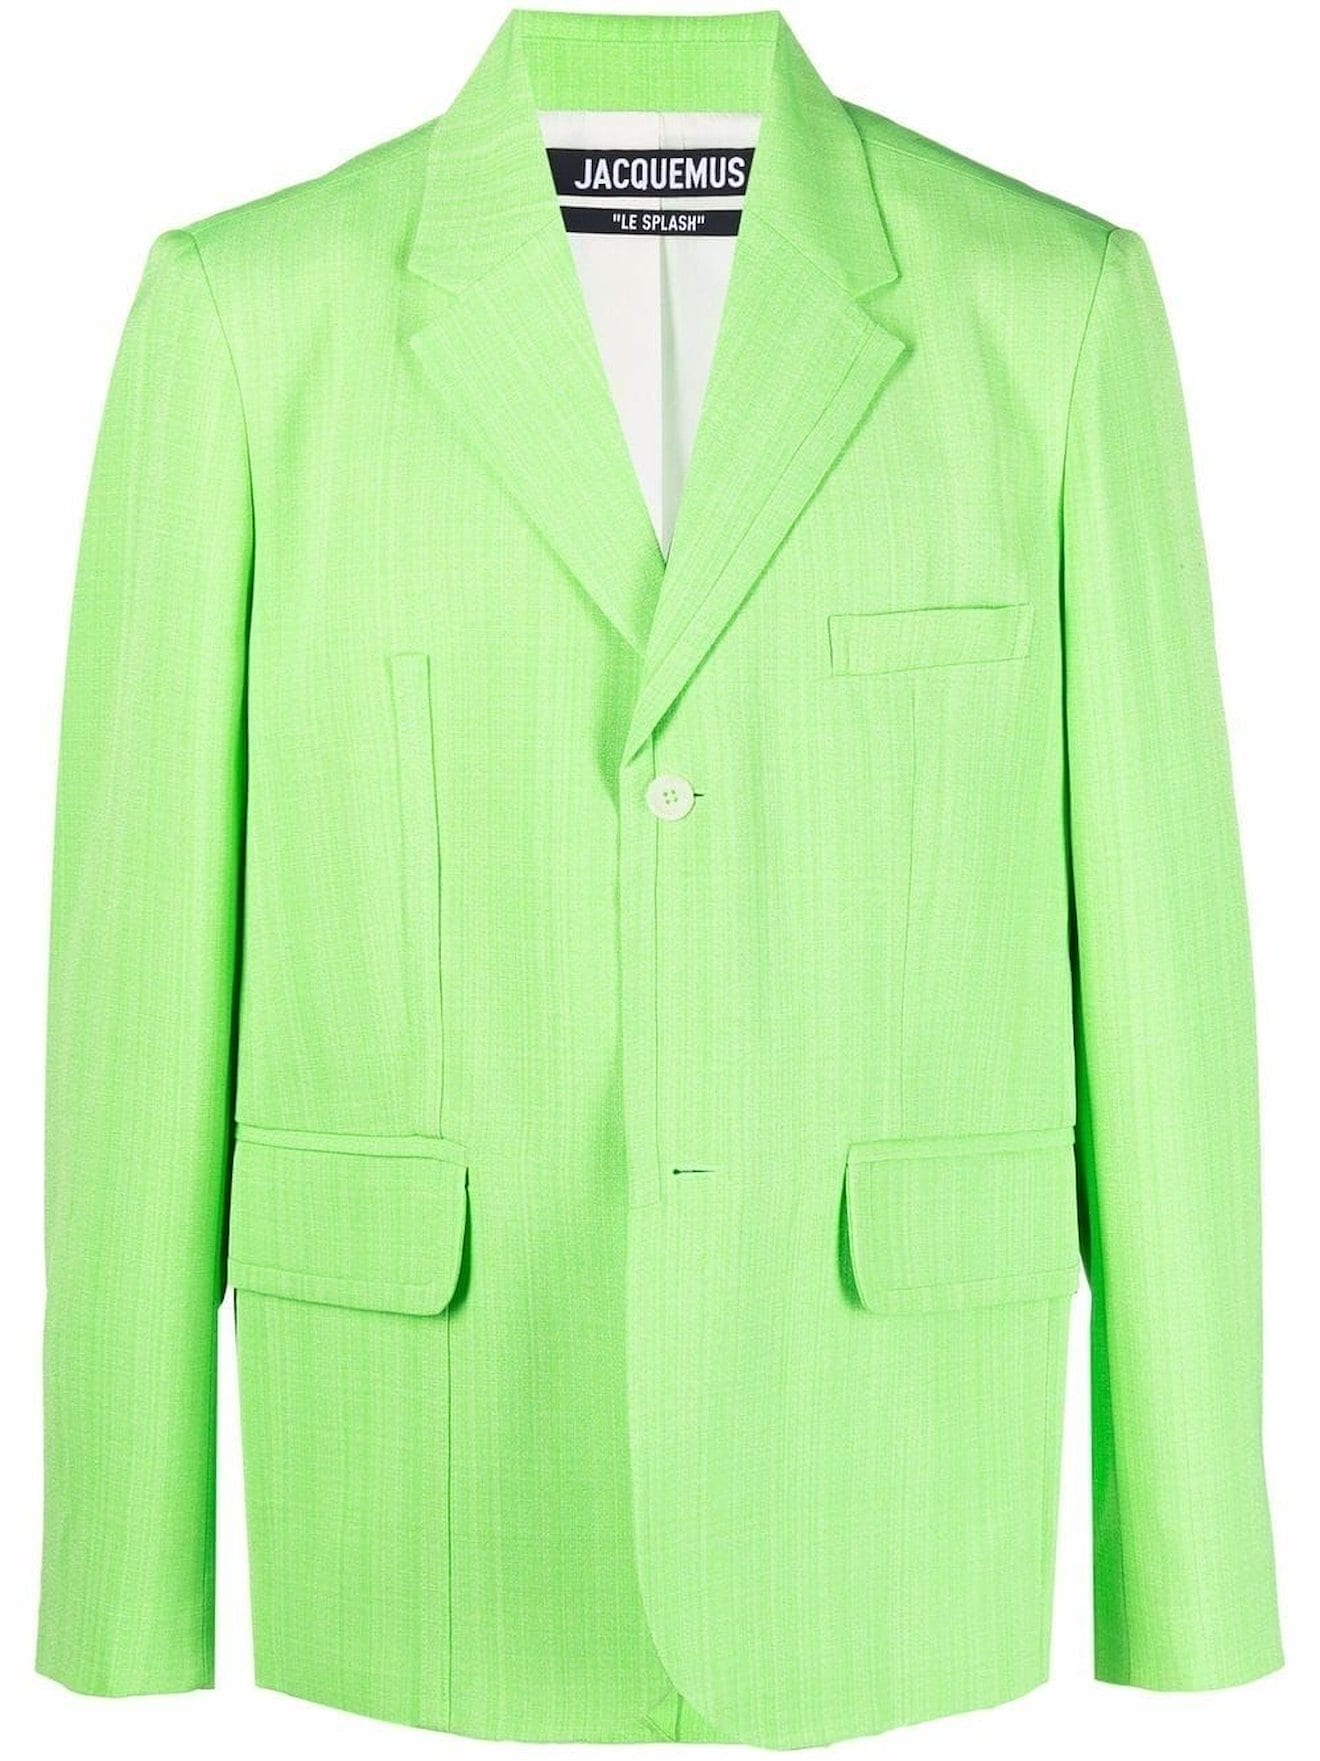 Jacquemus La Veste blazer green | MODES